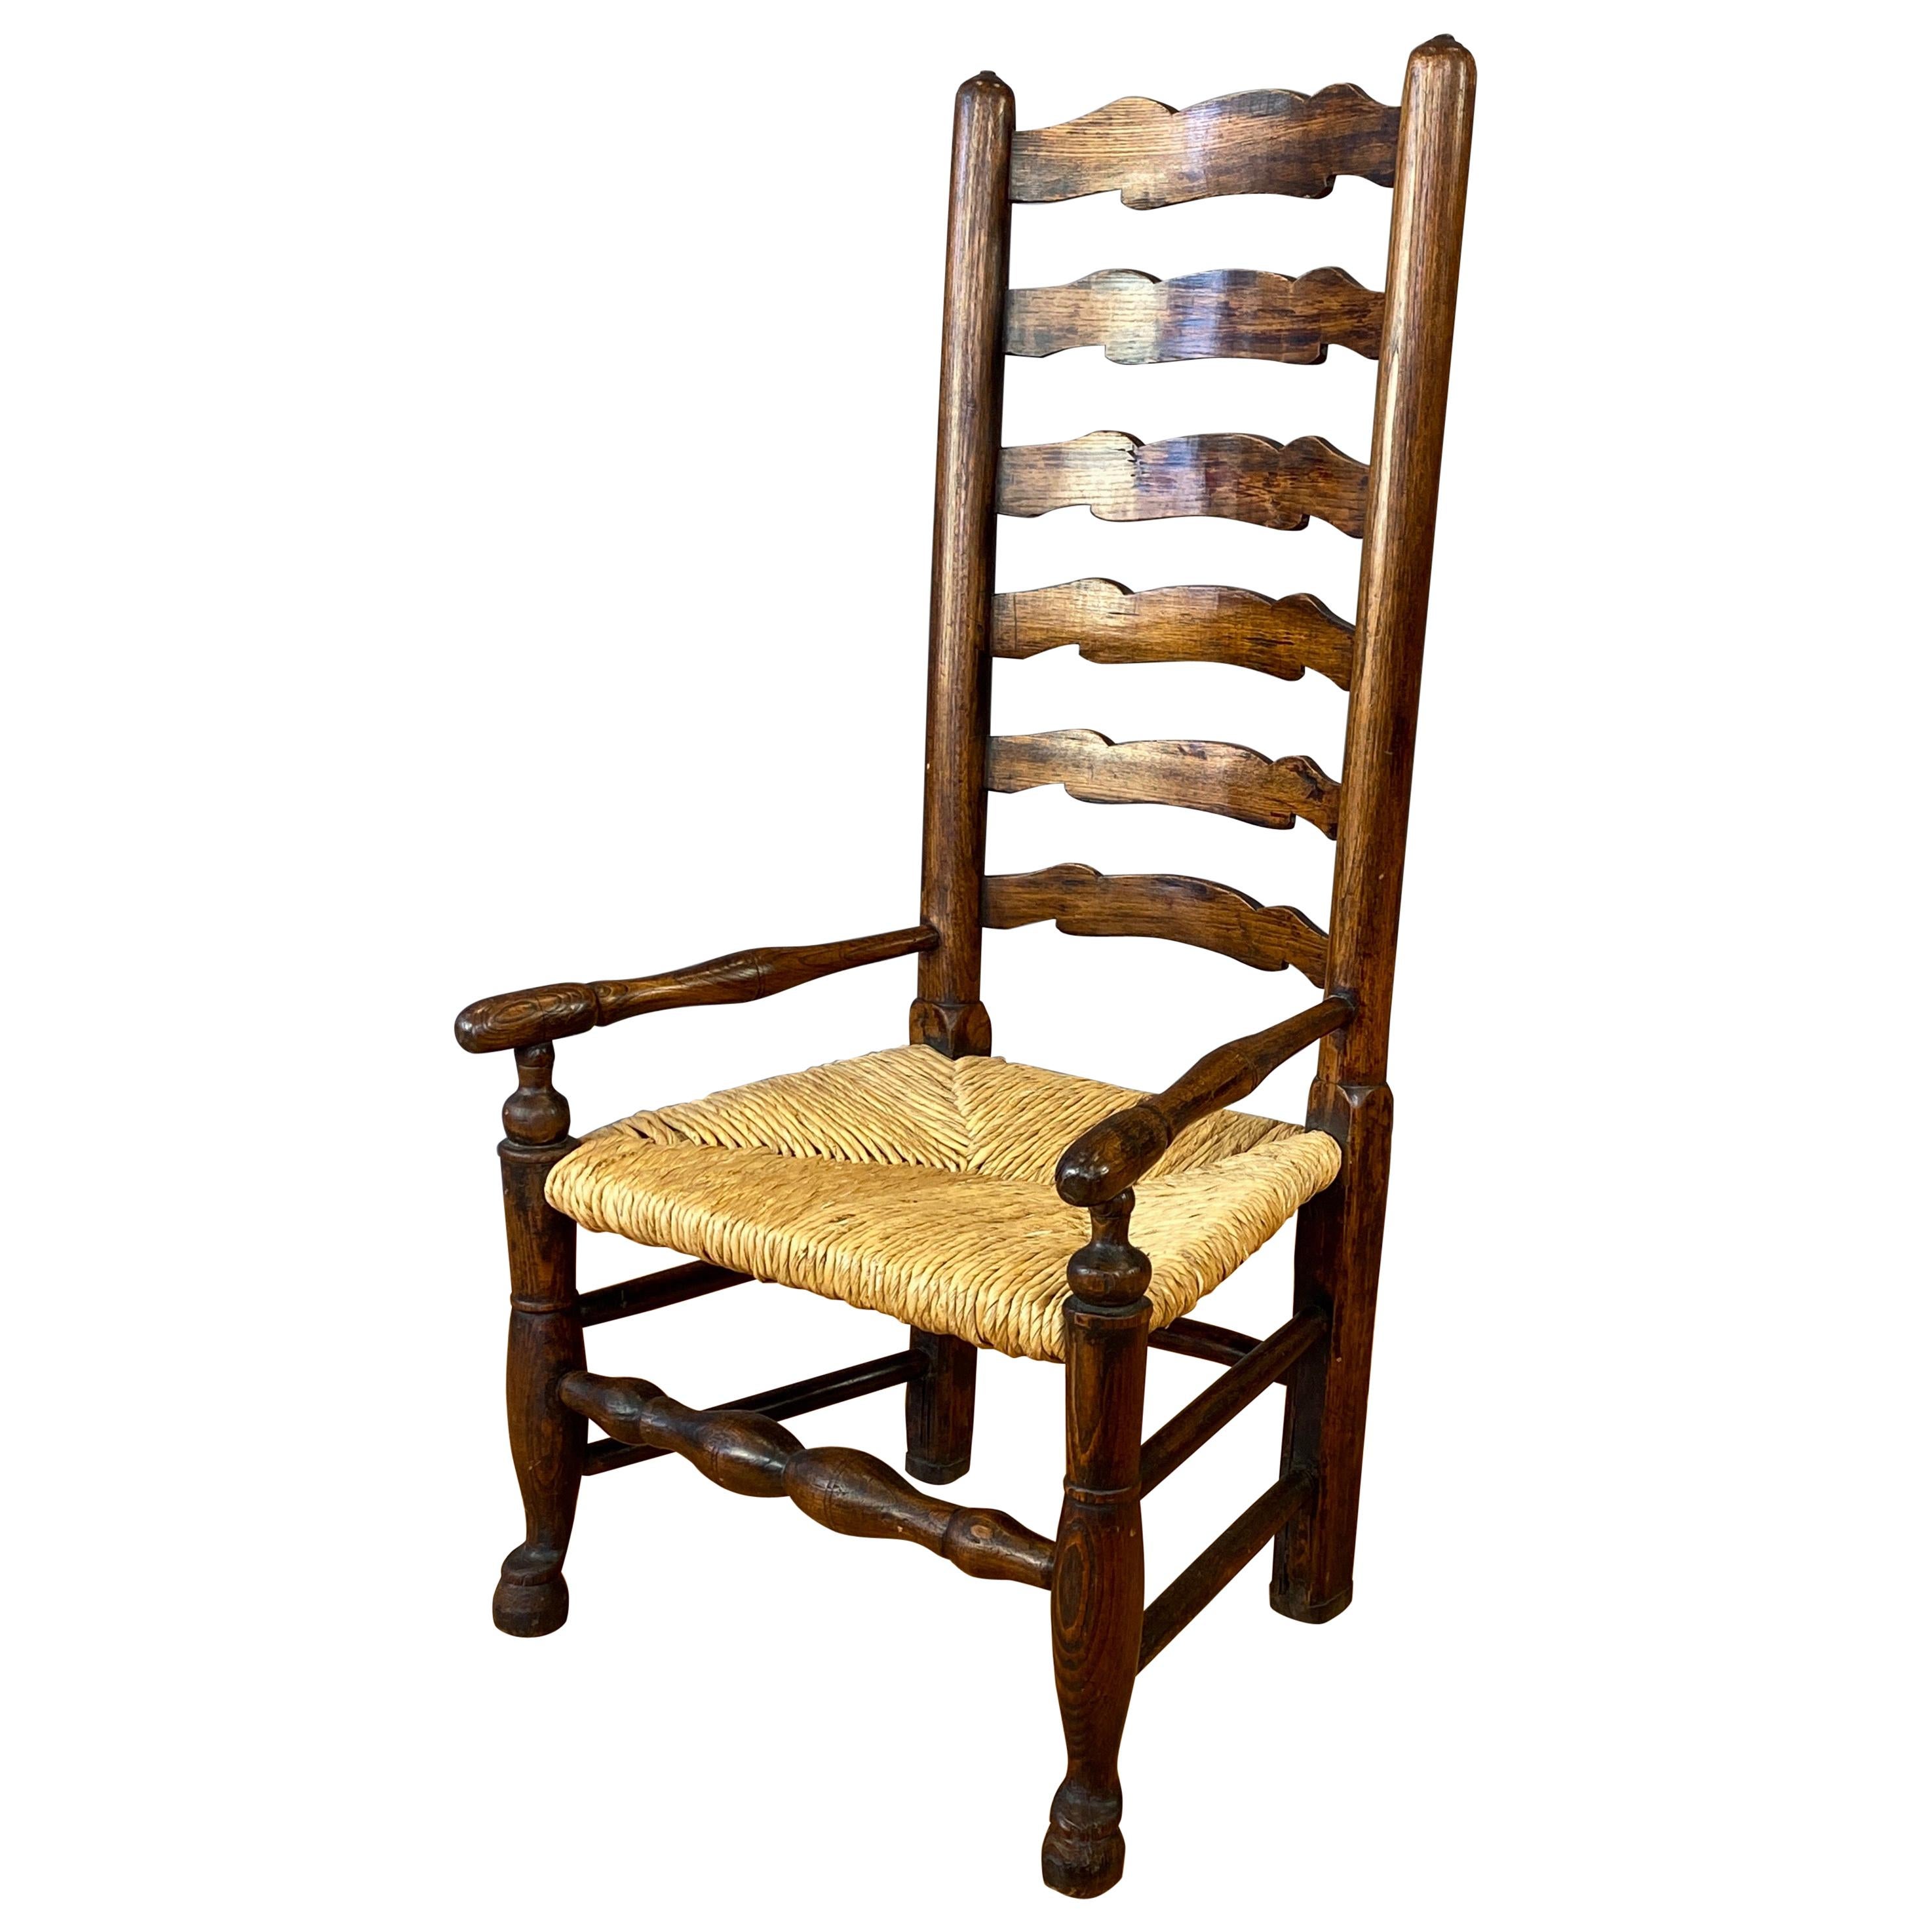 English Georgian Period Elm Ladderback Fireside Armchair with Rush Seat, c. 1800 For Sale